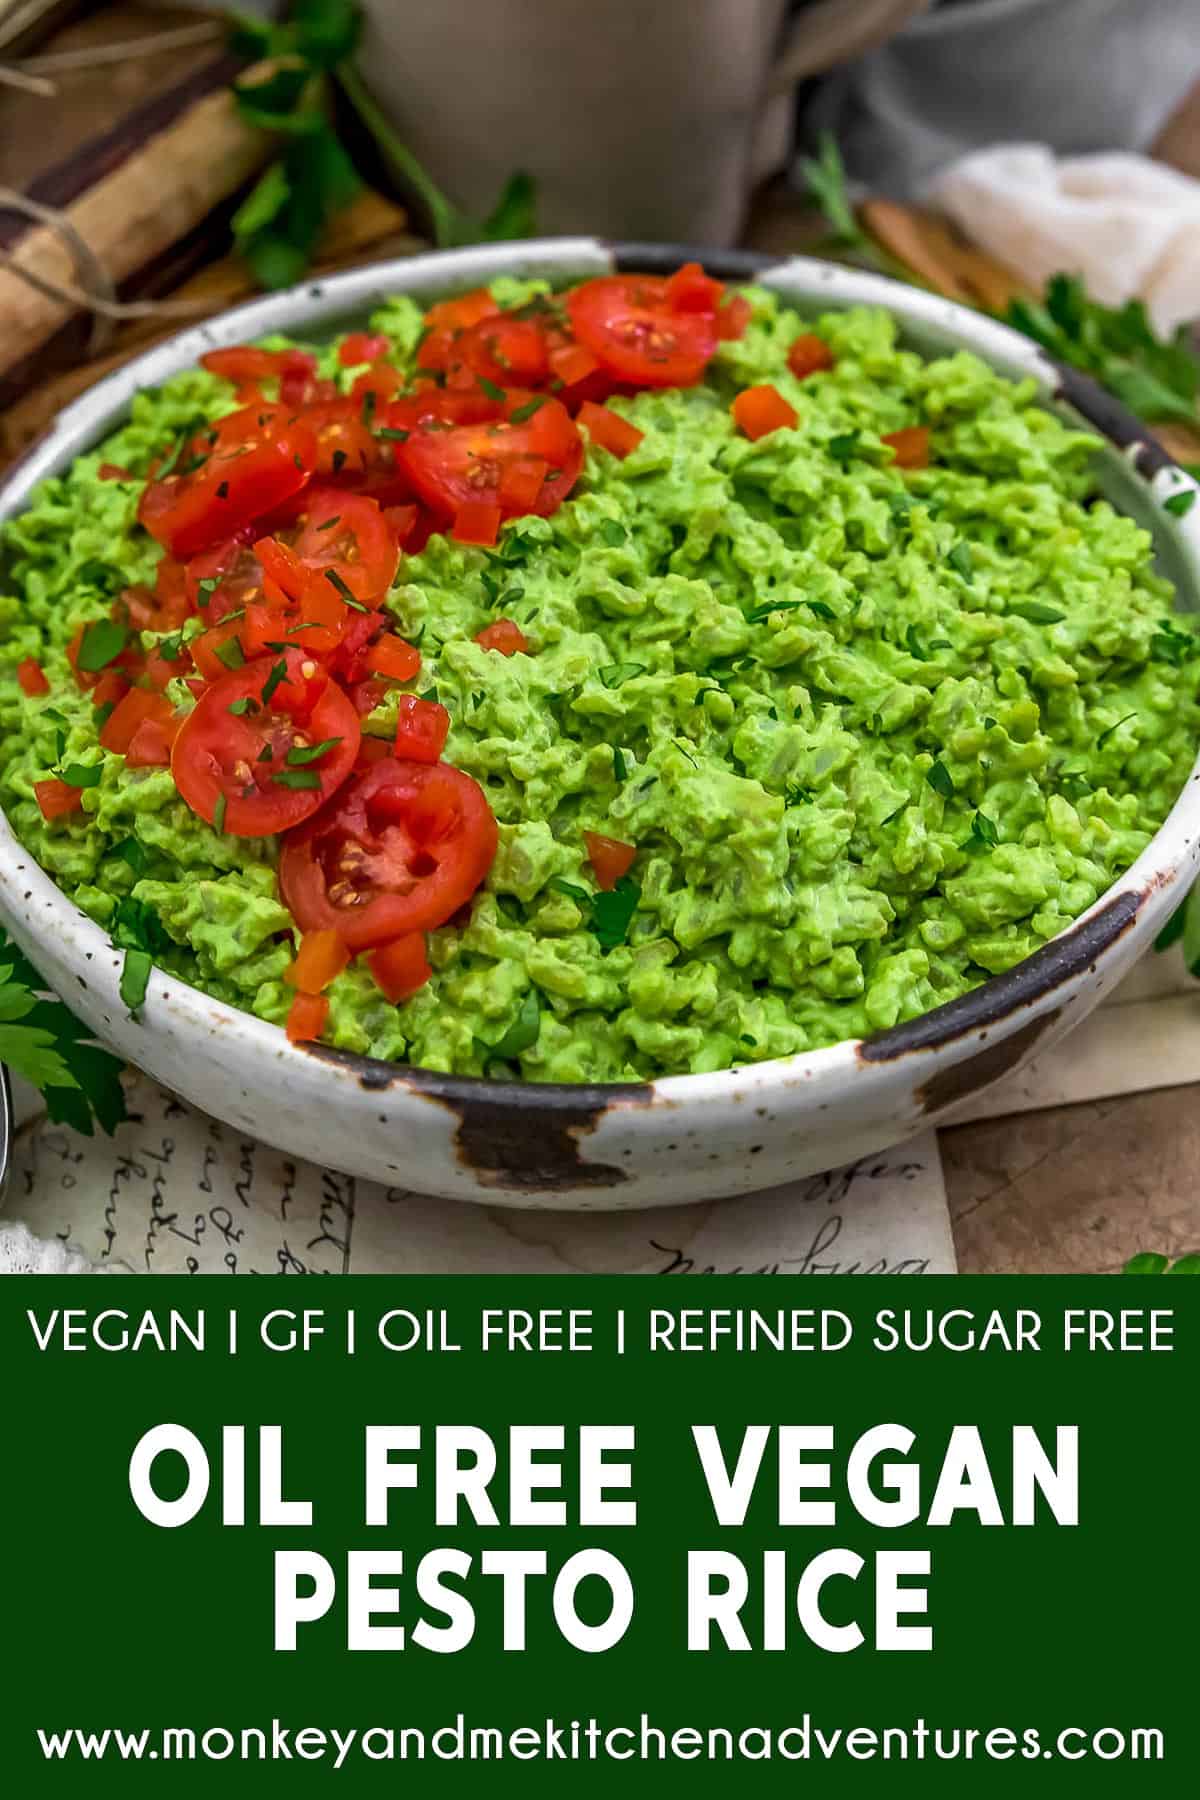 Oil Free Vegan Pesto Rice with text description